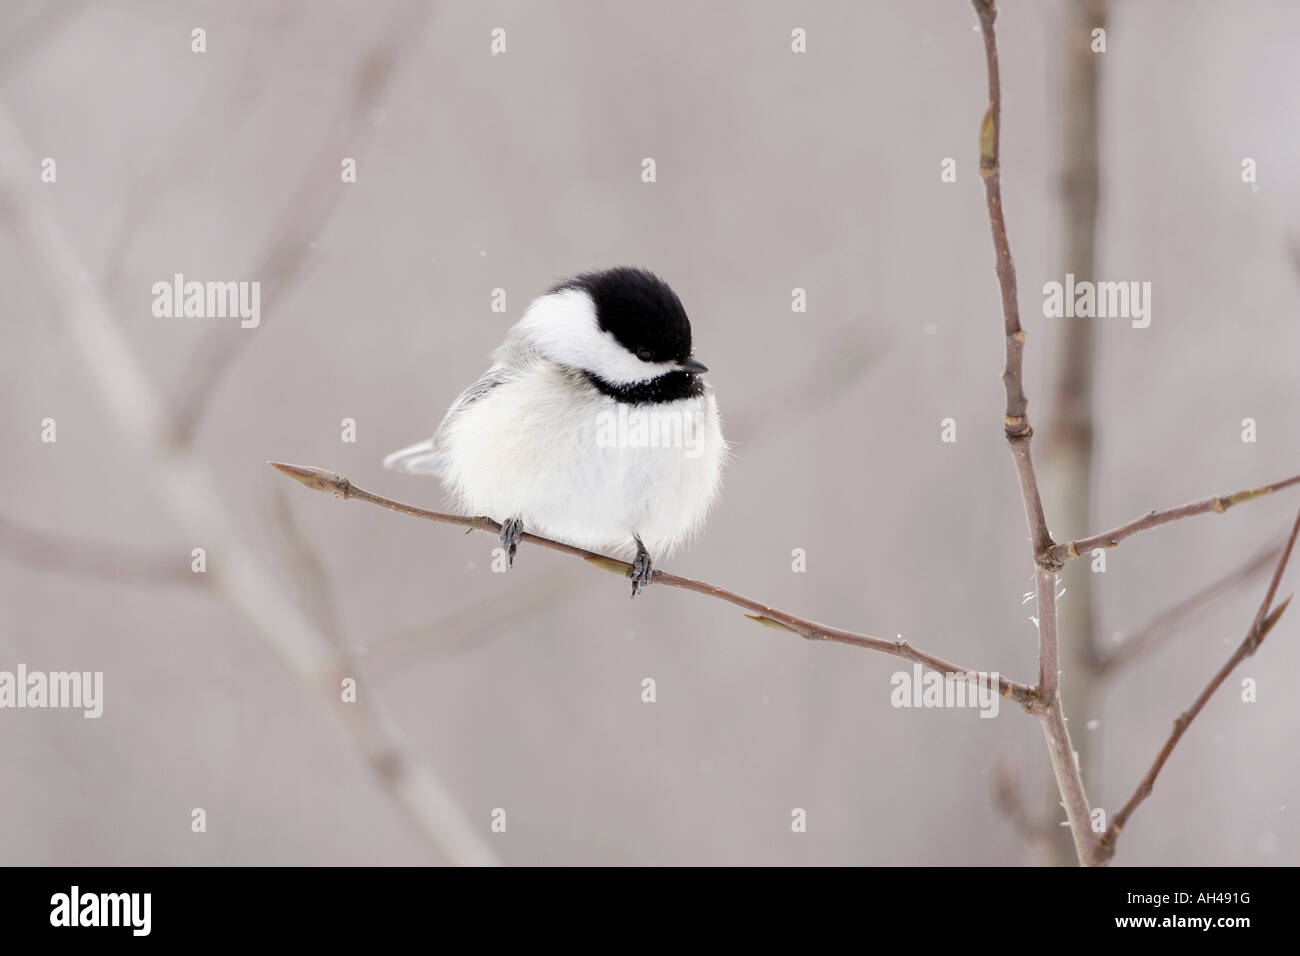 Bird on a branch Stock Photo